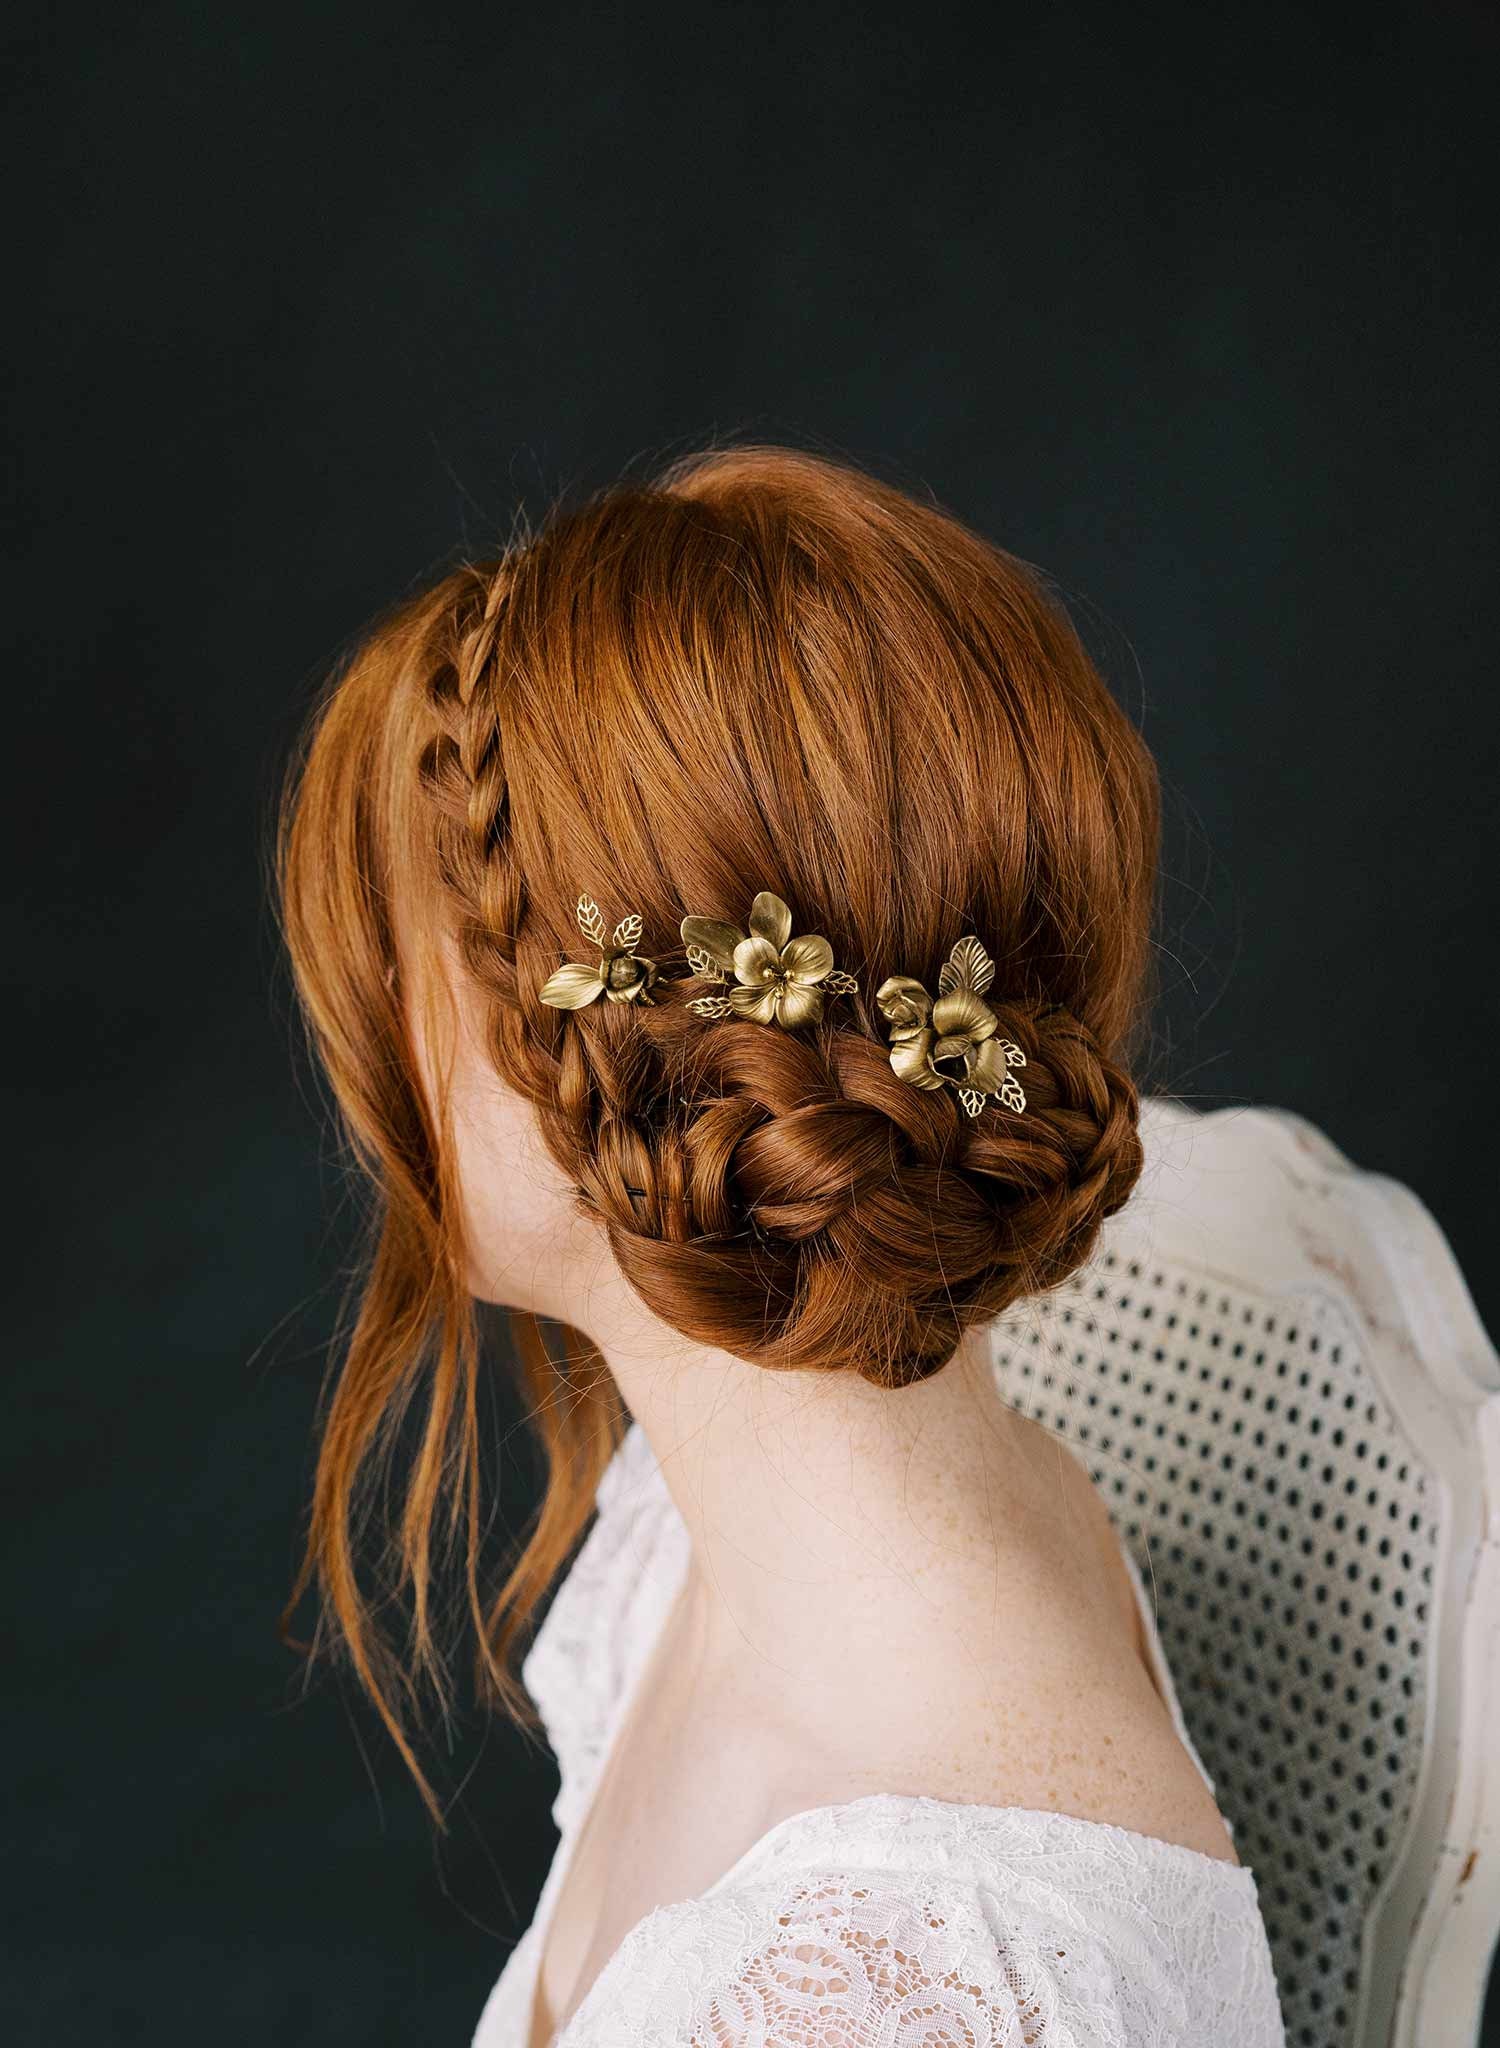 4 Pieces Wedding Hair Clip Rhinestones Hair Comb Silver Hair Piece with  Pearls Vintage Pins Accessories Flower Bridal Hair Pin for Women, Bride